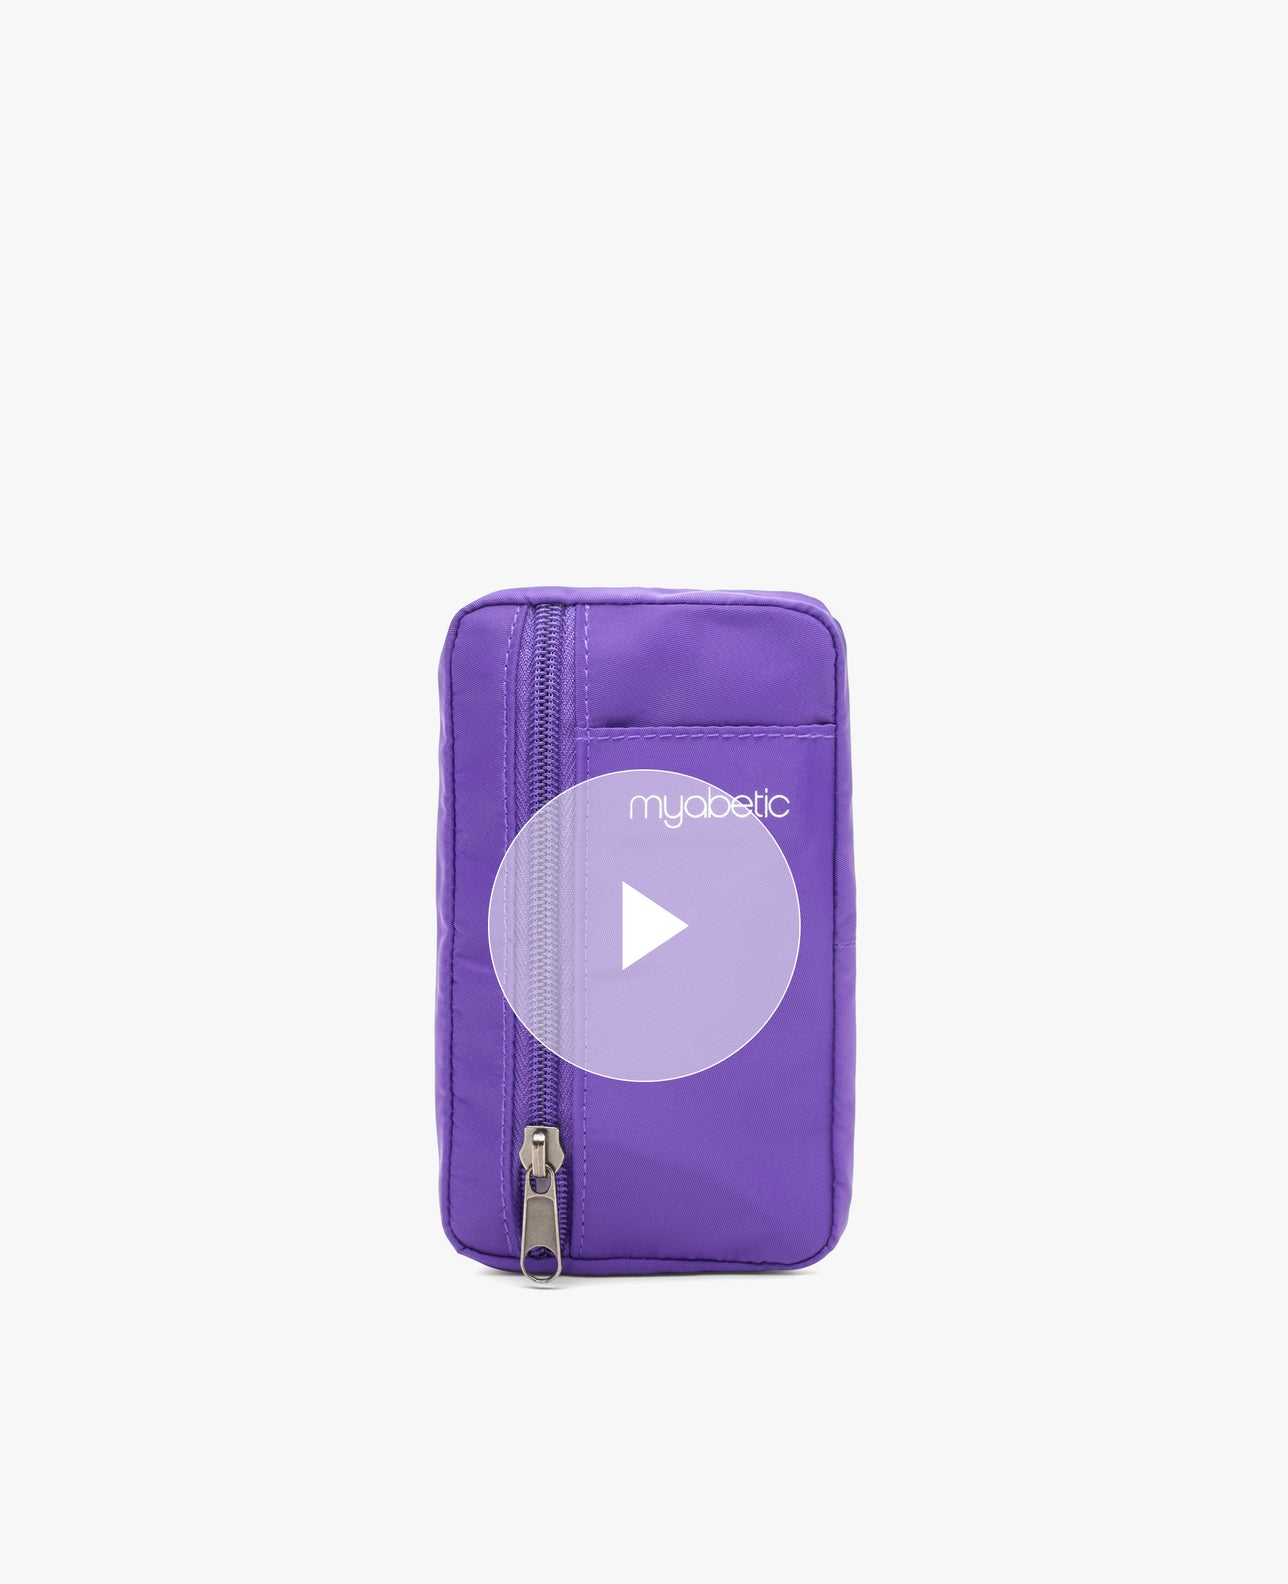 color:purple  https://player.vimeo.com/video/511451689